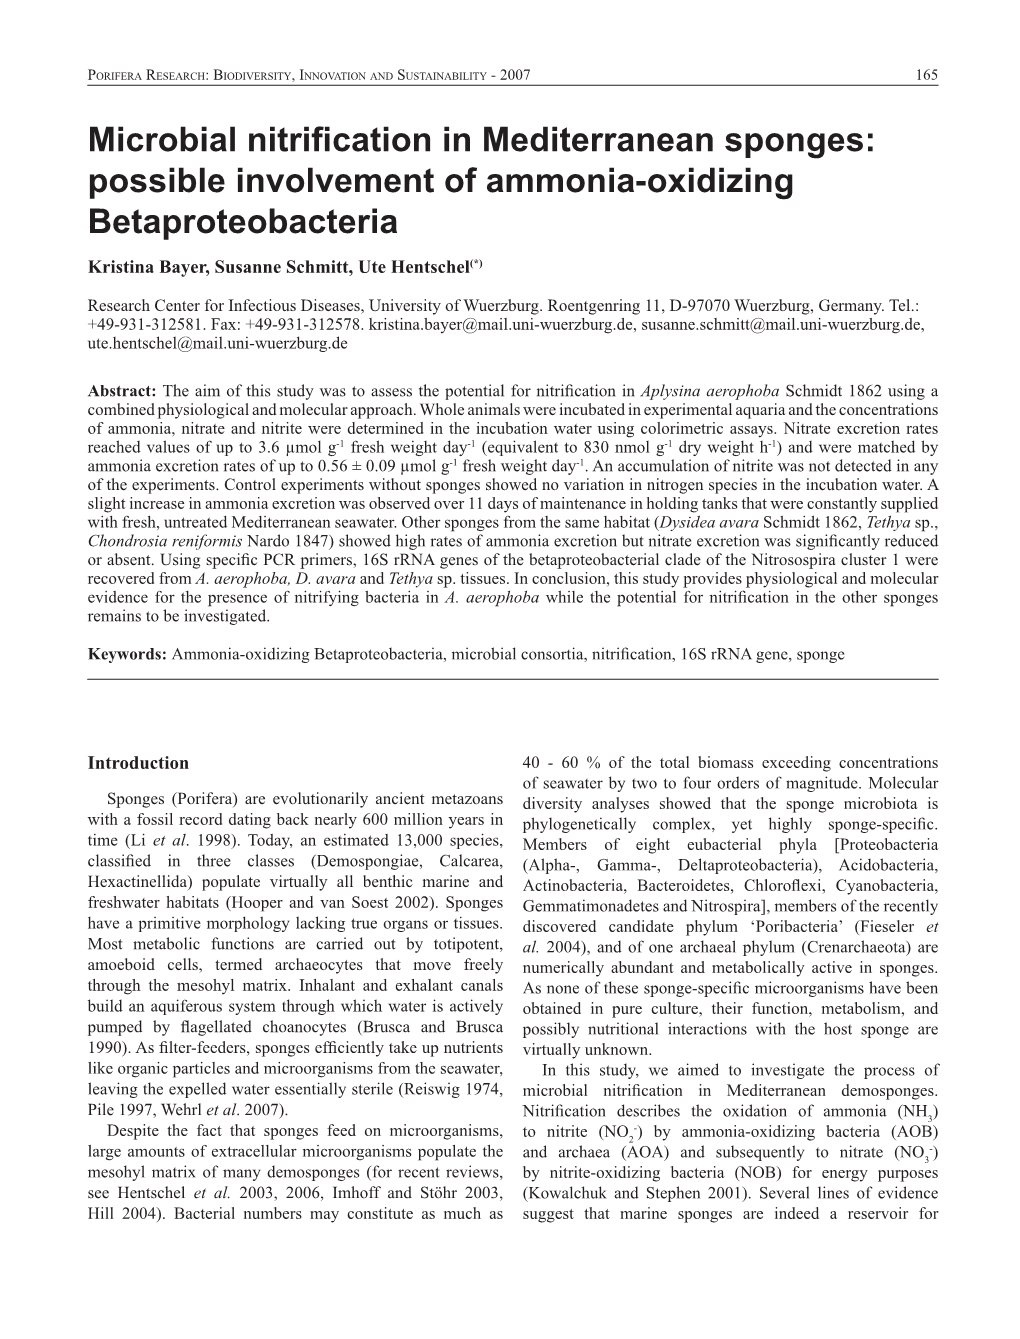 Microbial Nitrification in Mediterranean Sponges: Possible Involvement of Ammonia-Oxidizing Betaproteobacteria Kristina Bayer, Susanne Schmitt, Ute Hentschel(*)